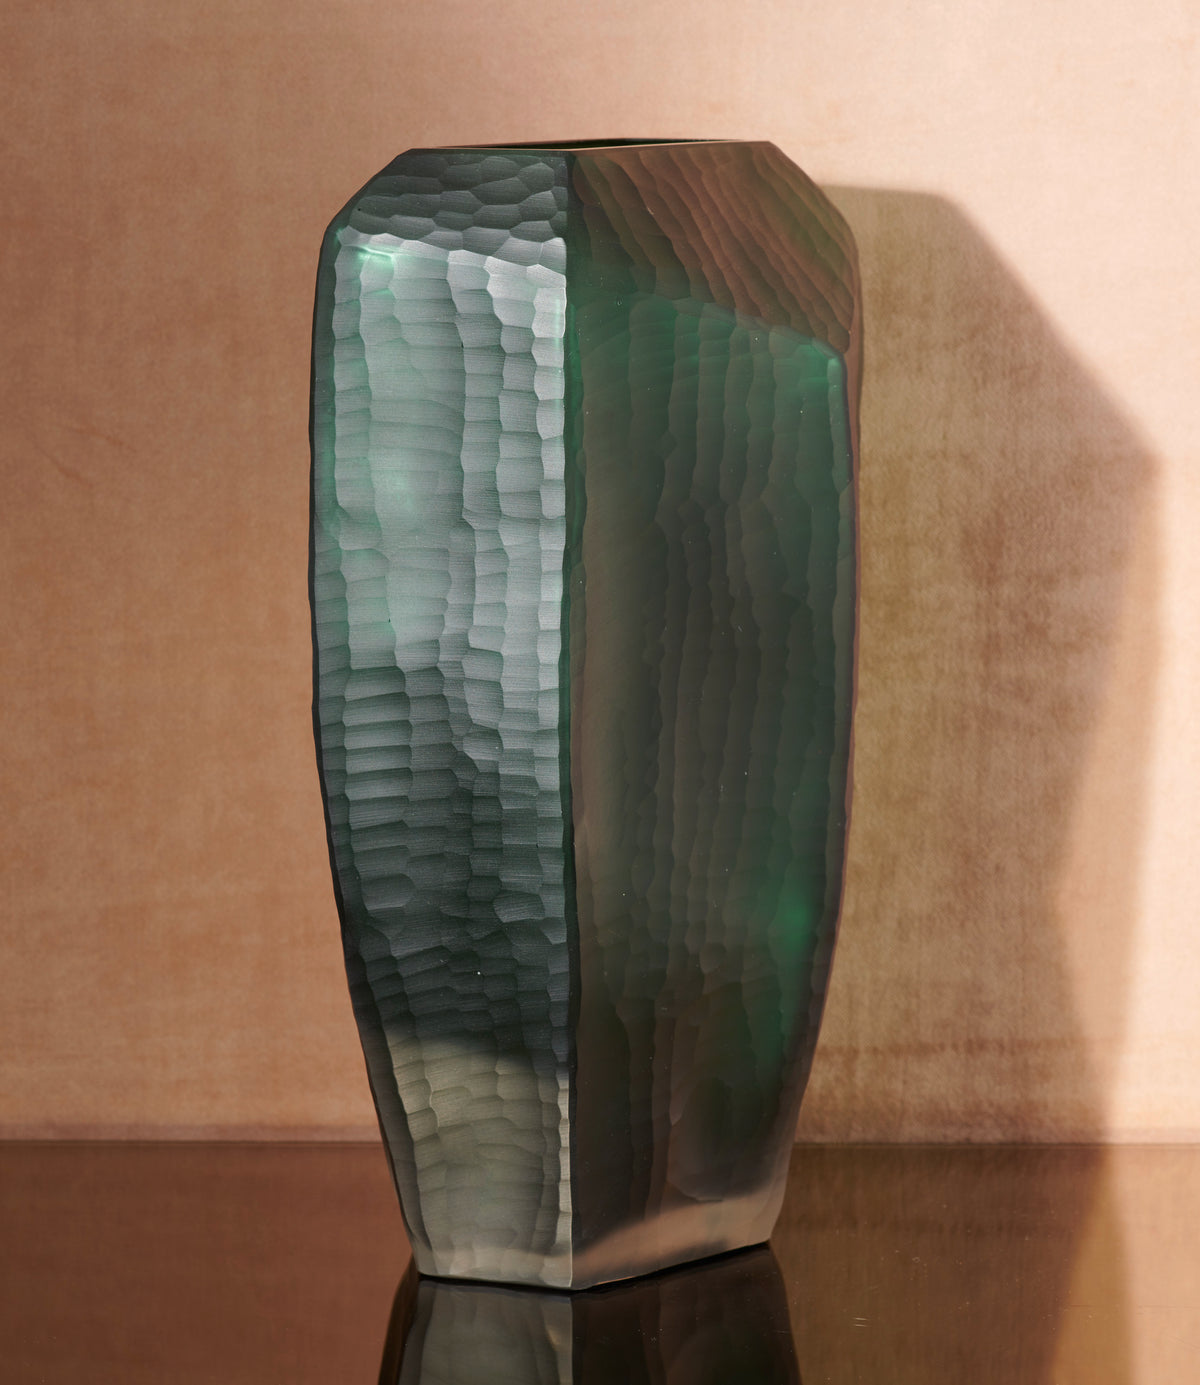 O4Home - Vase (eckig) aus geschnitztem Organe Glas in Saphirgrün